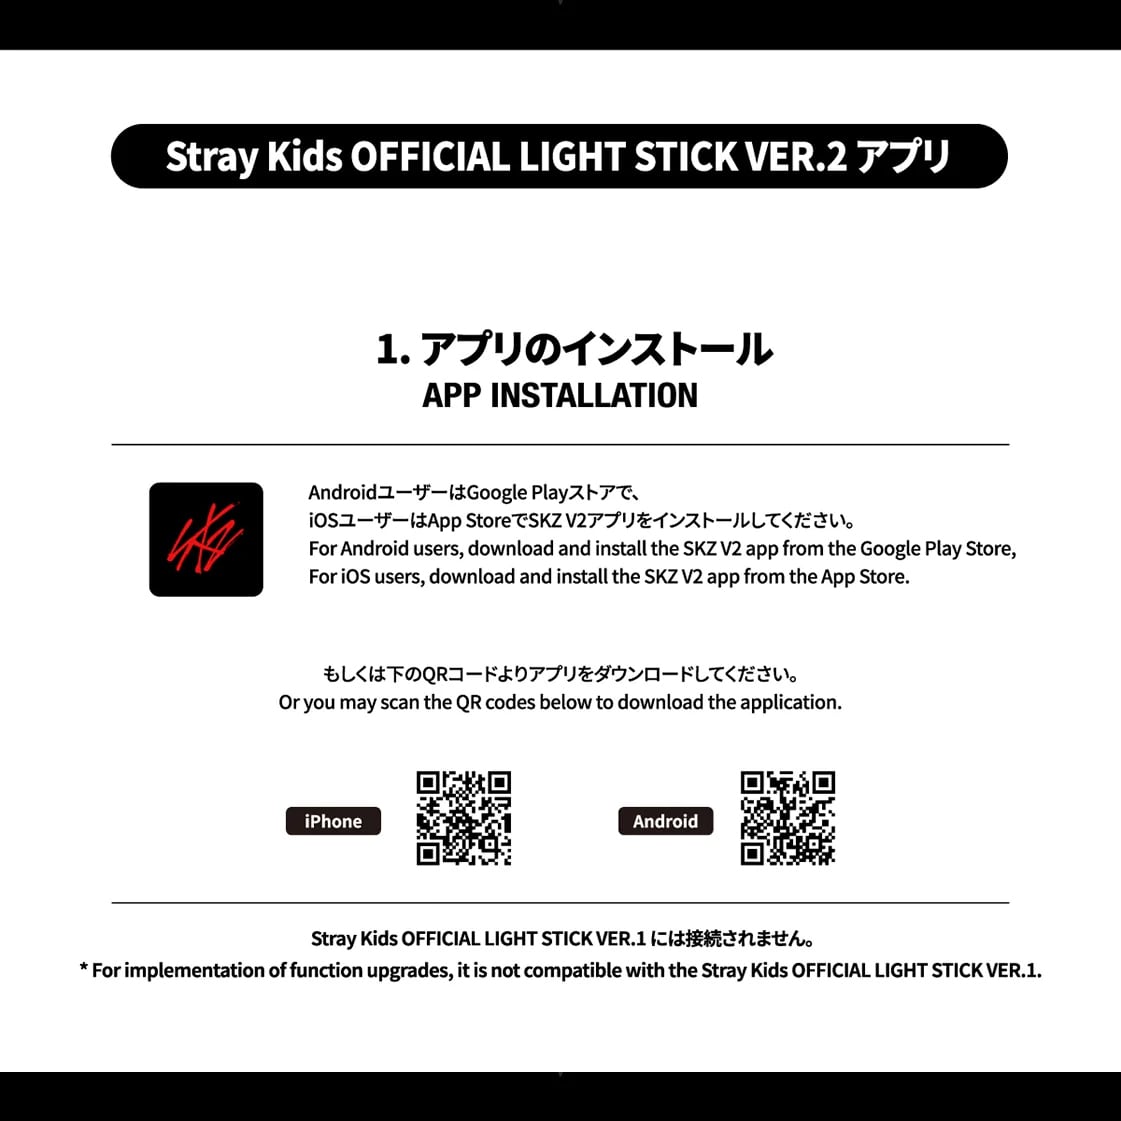 Straykid light stick ver.2 2本セット